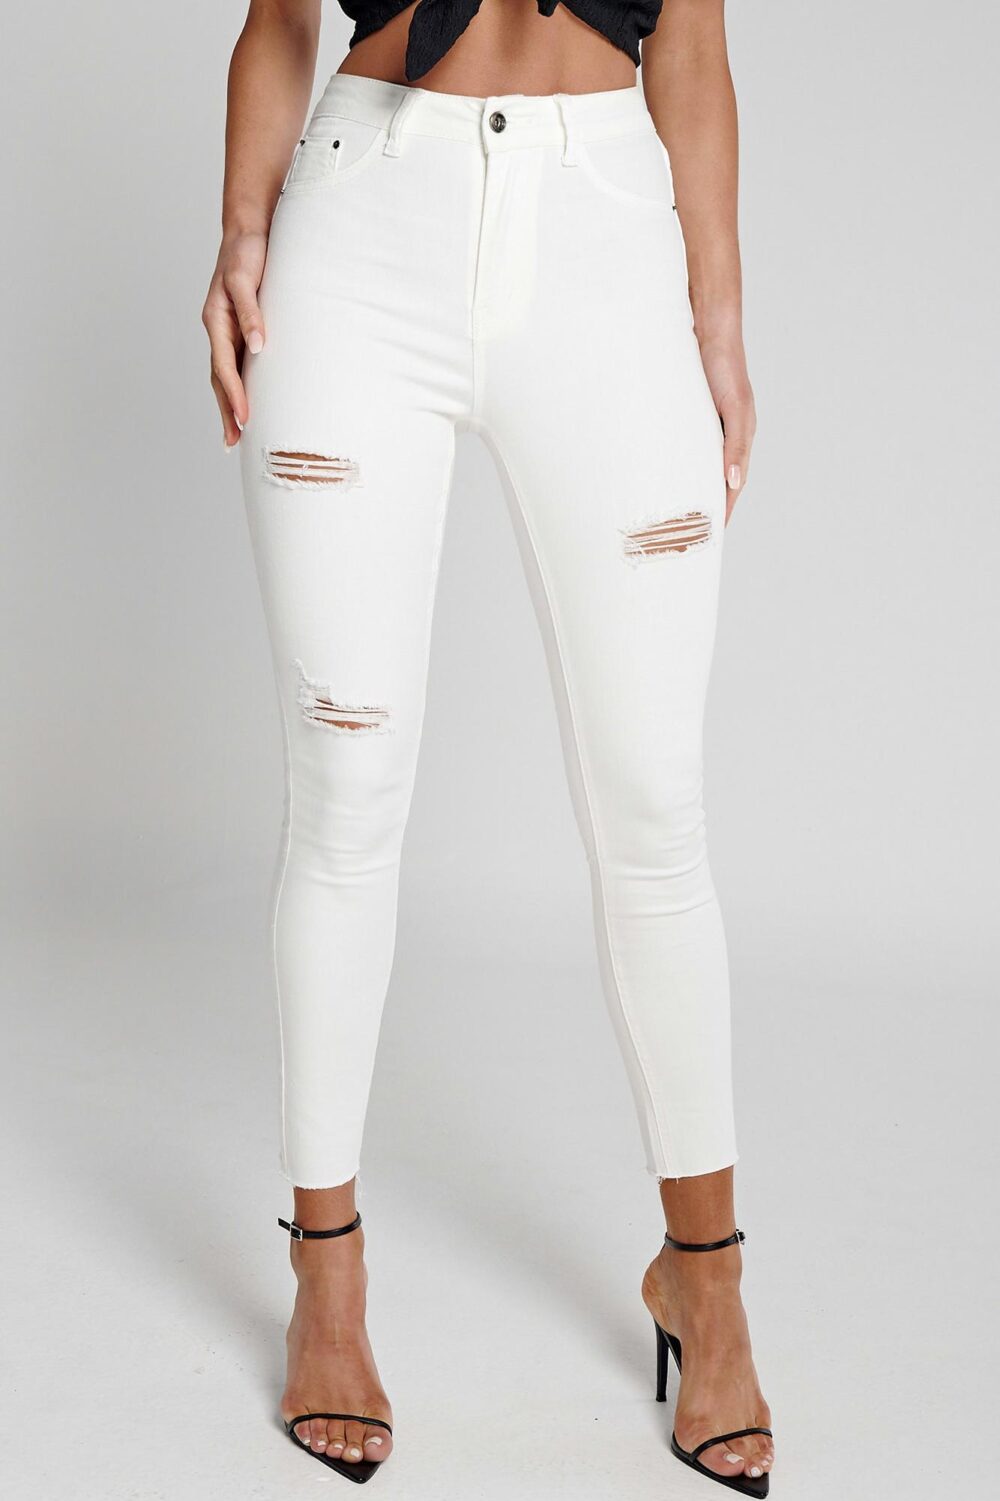 Ladies Jeans Colour is White